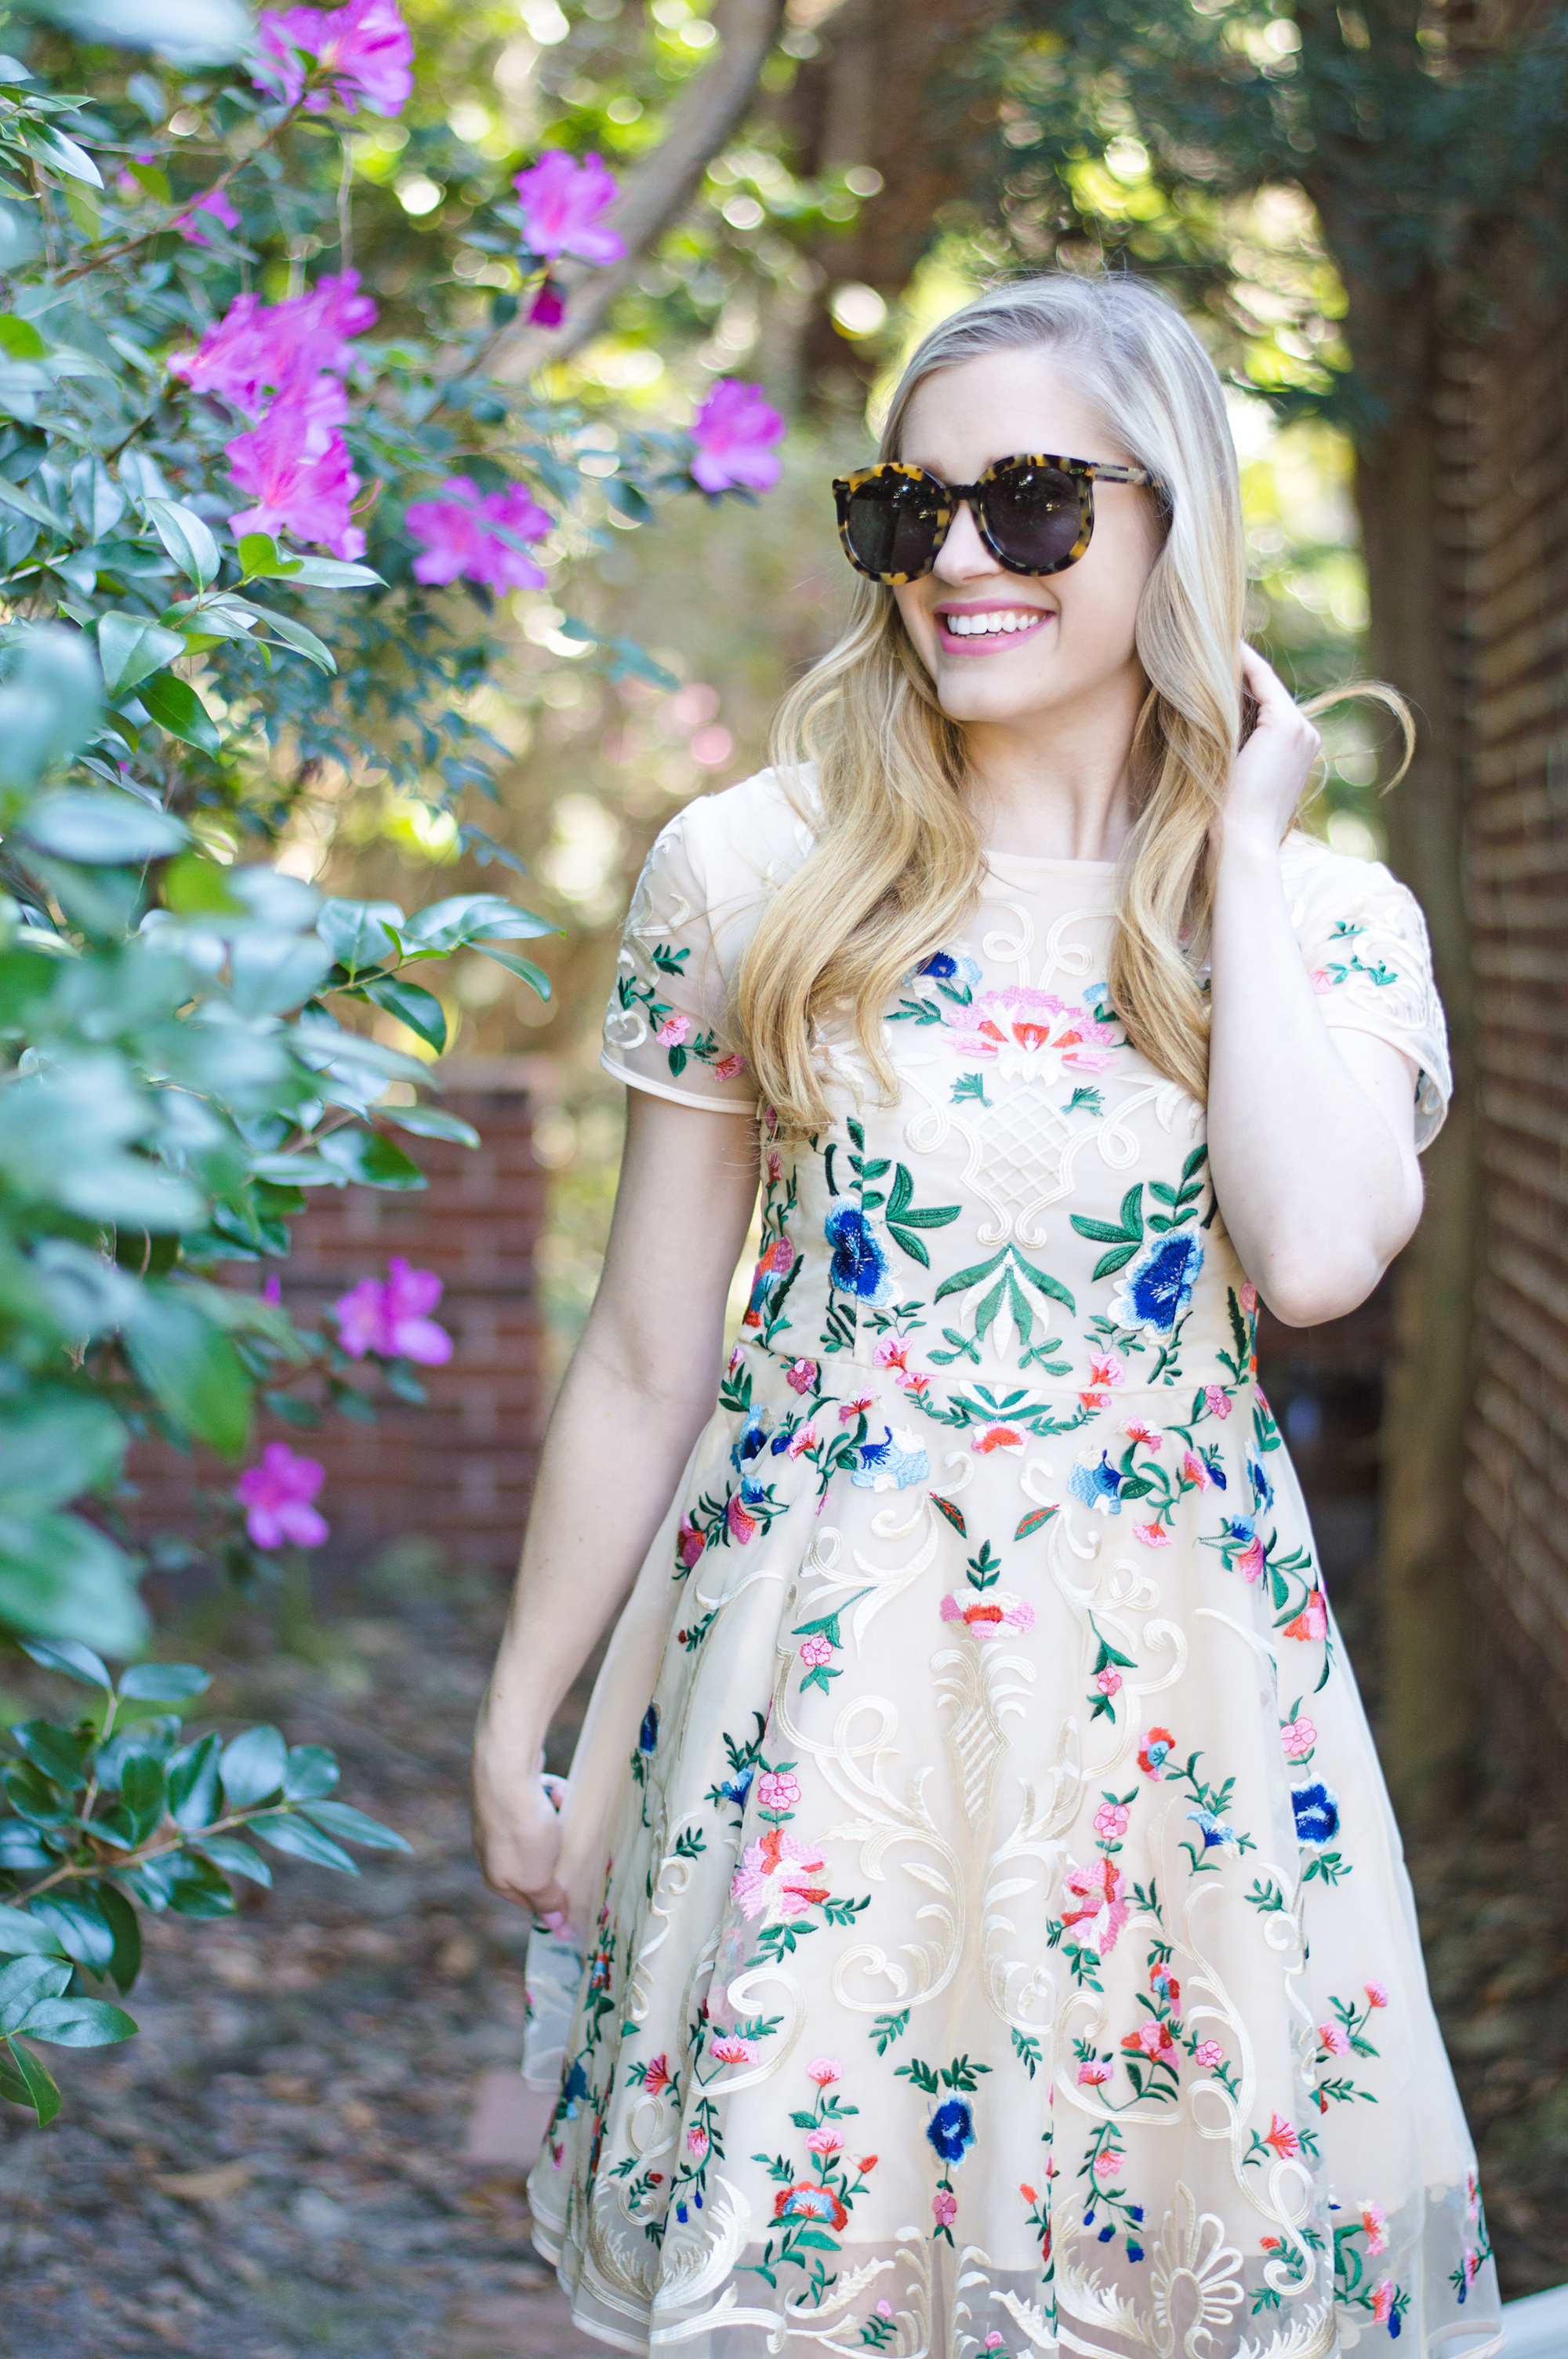 styelled-blog-elle-elisabeth-fashion-style-blogger-fblogger-spring-dress-embroidered-wedding-chicwish-floral-feminine-flirty-karen-walker-09